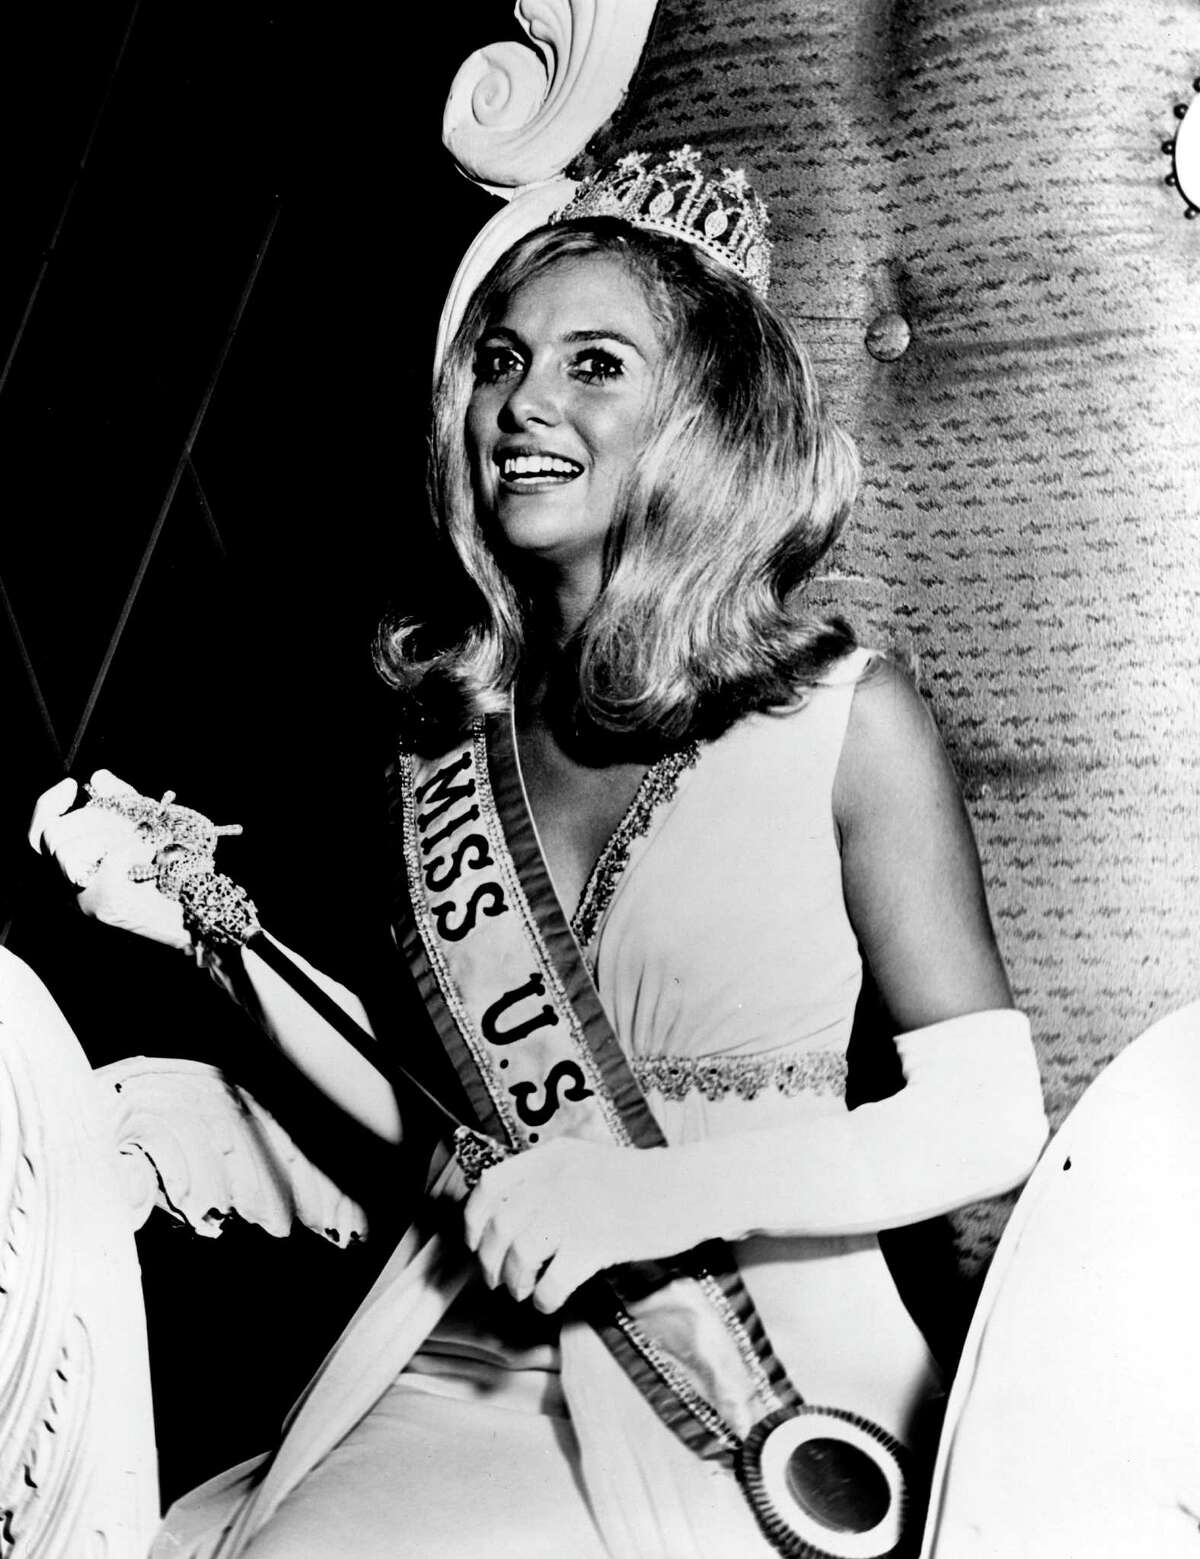 Miss Usa Winners Through The Years